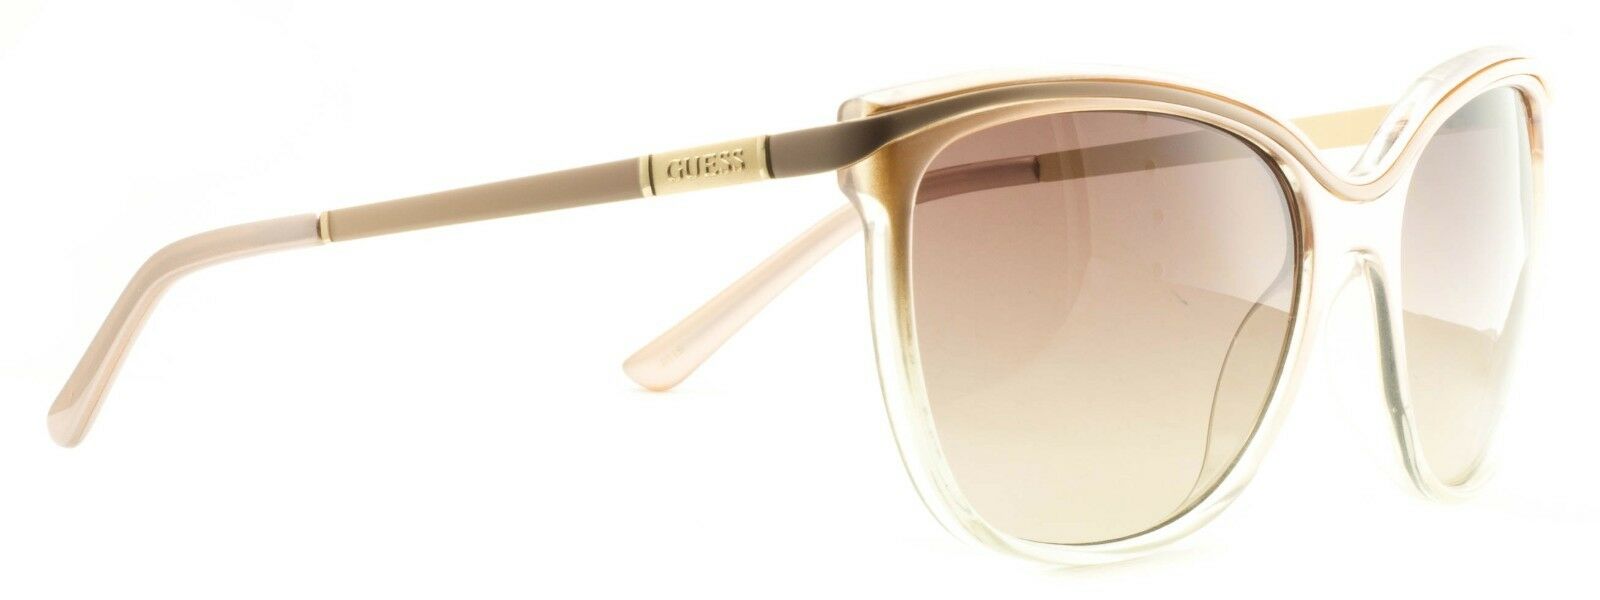 GUESS GU 7420 72F Sunglasses Shades Fast Shipping BNIB - Brand New in Case